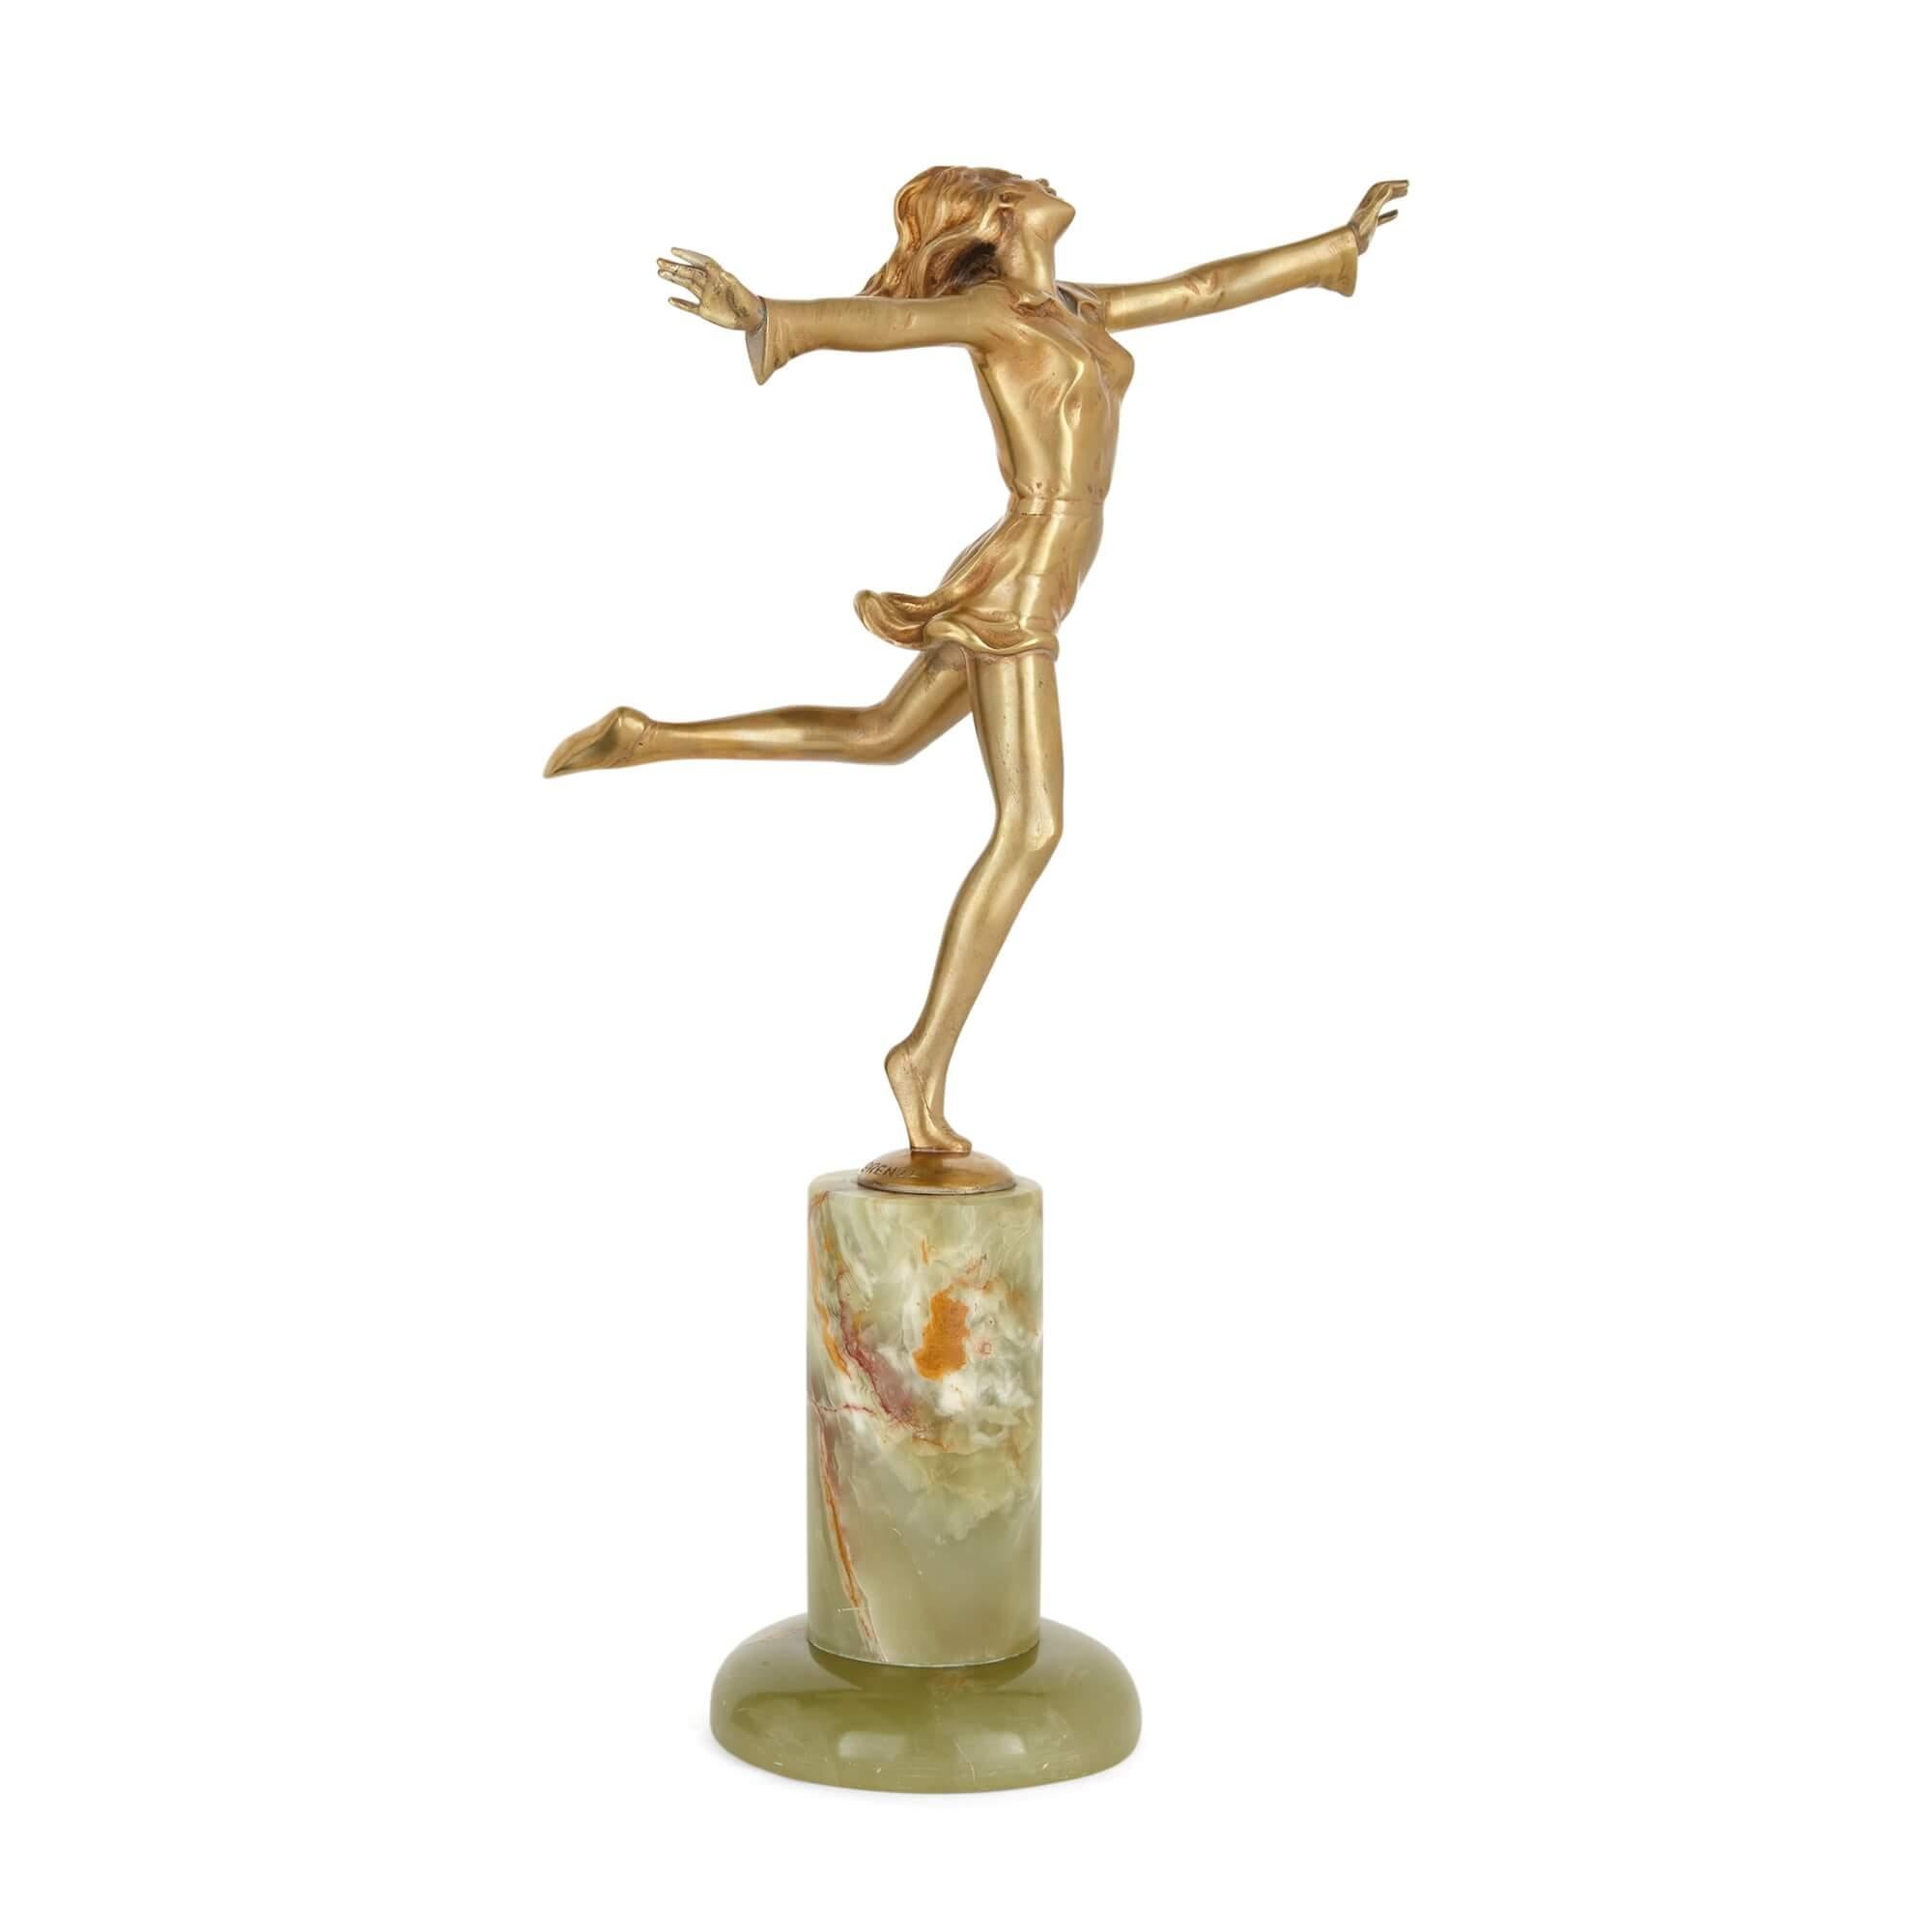 Art Deco gilt bronze and onyx figure of a dancer by Lorenzl 
Austrian, c. 1925
Height 31cm, width 17cm, depth 20cm

Josef Lorenzl (1892-1950), a renowned Austrian sculptor and ceramicist crafted this joyful figure of a dancer in around 1925. 

The